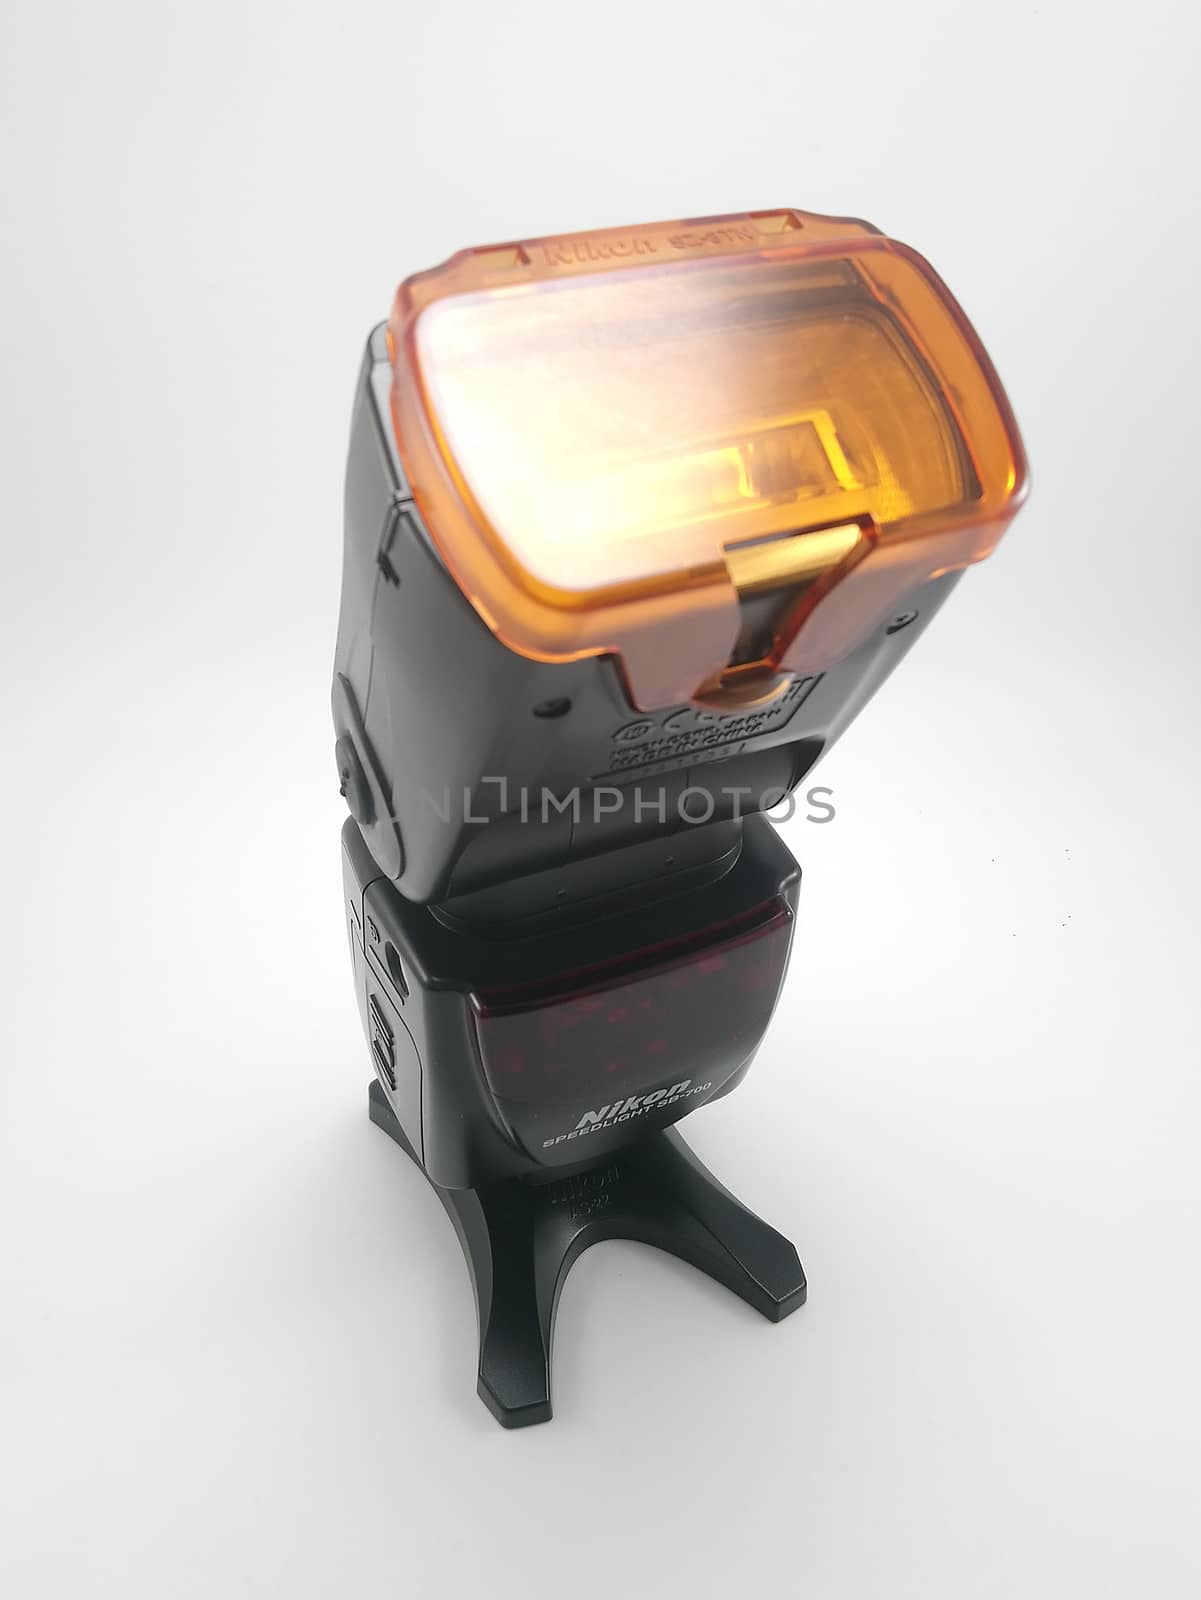 Nikon sb 700 flash speedlight with incandescent filter in Manila by imwaltersy